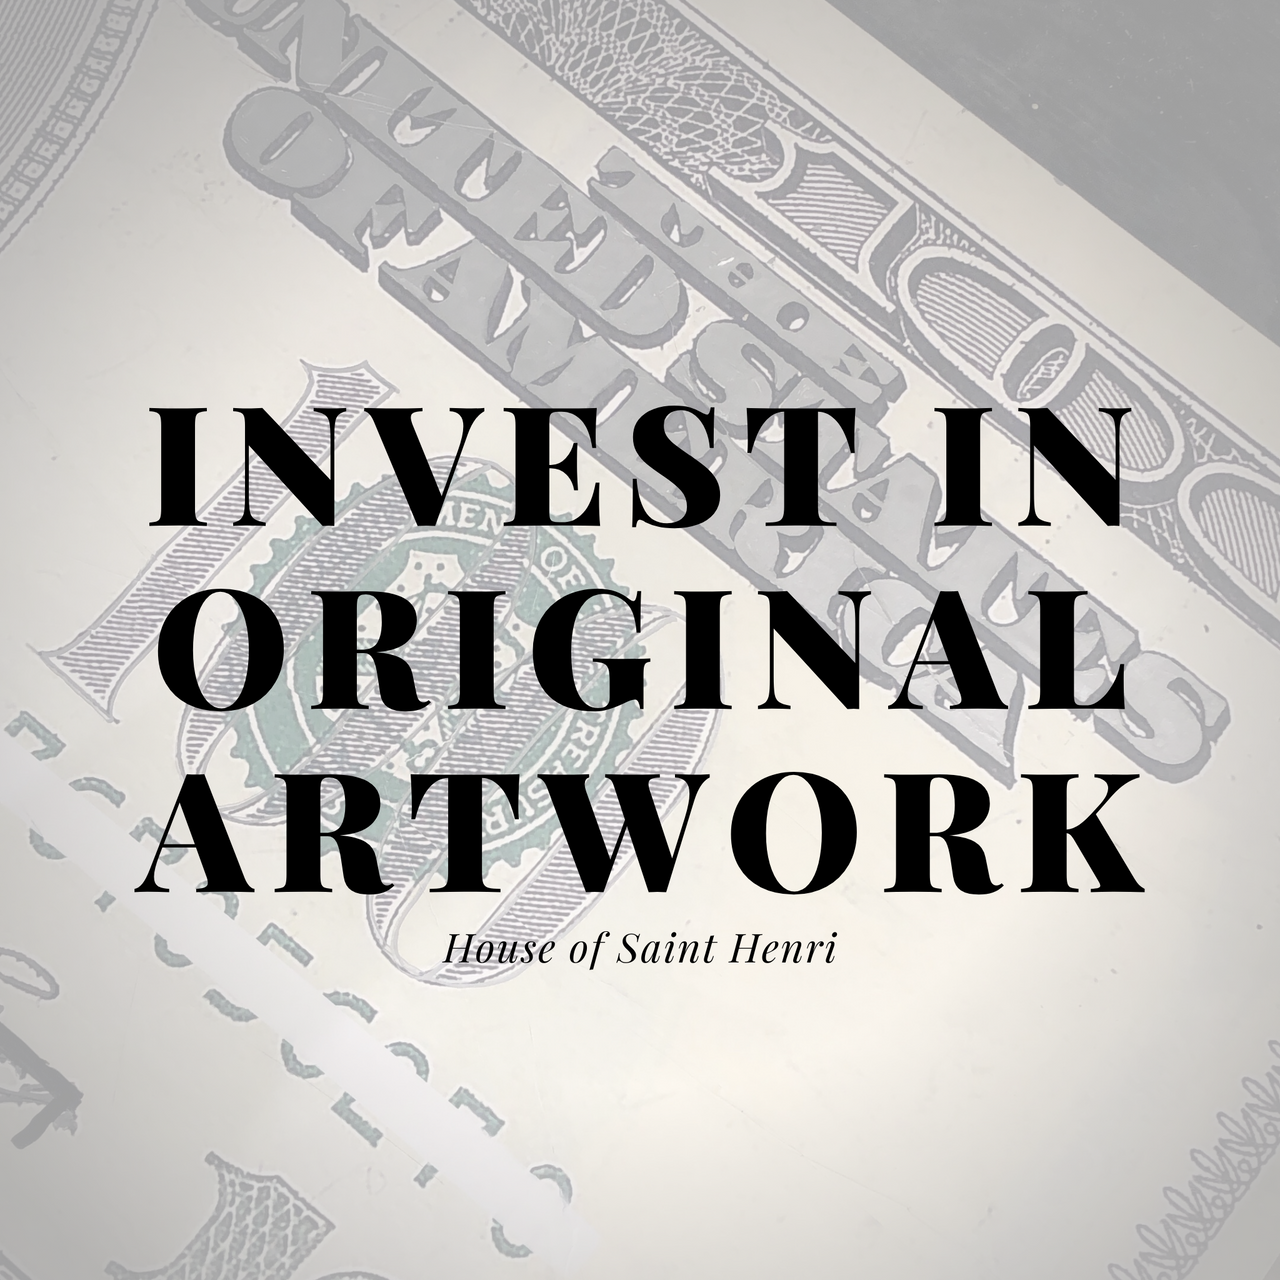 5 Reasons to invest  in original artwork